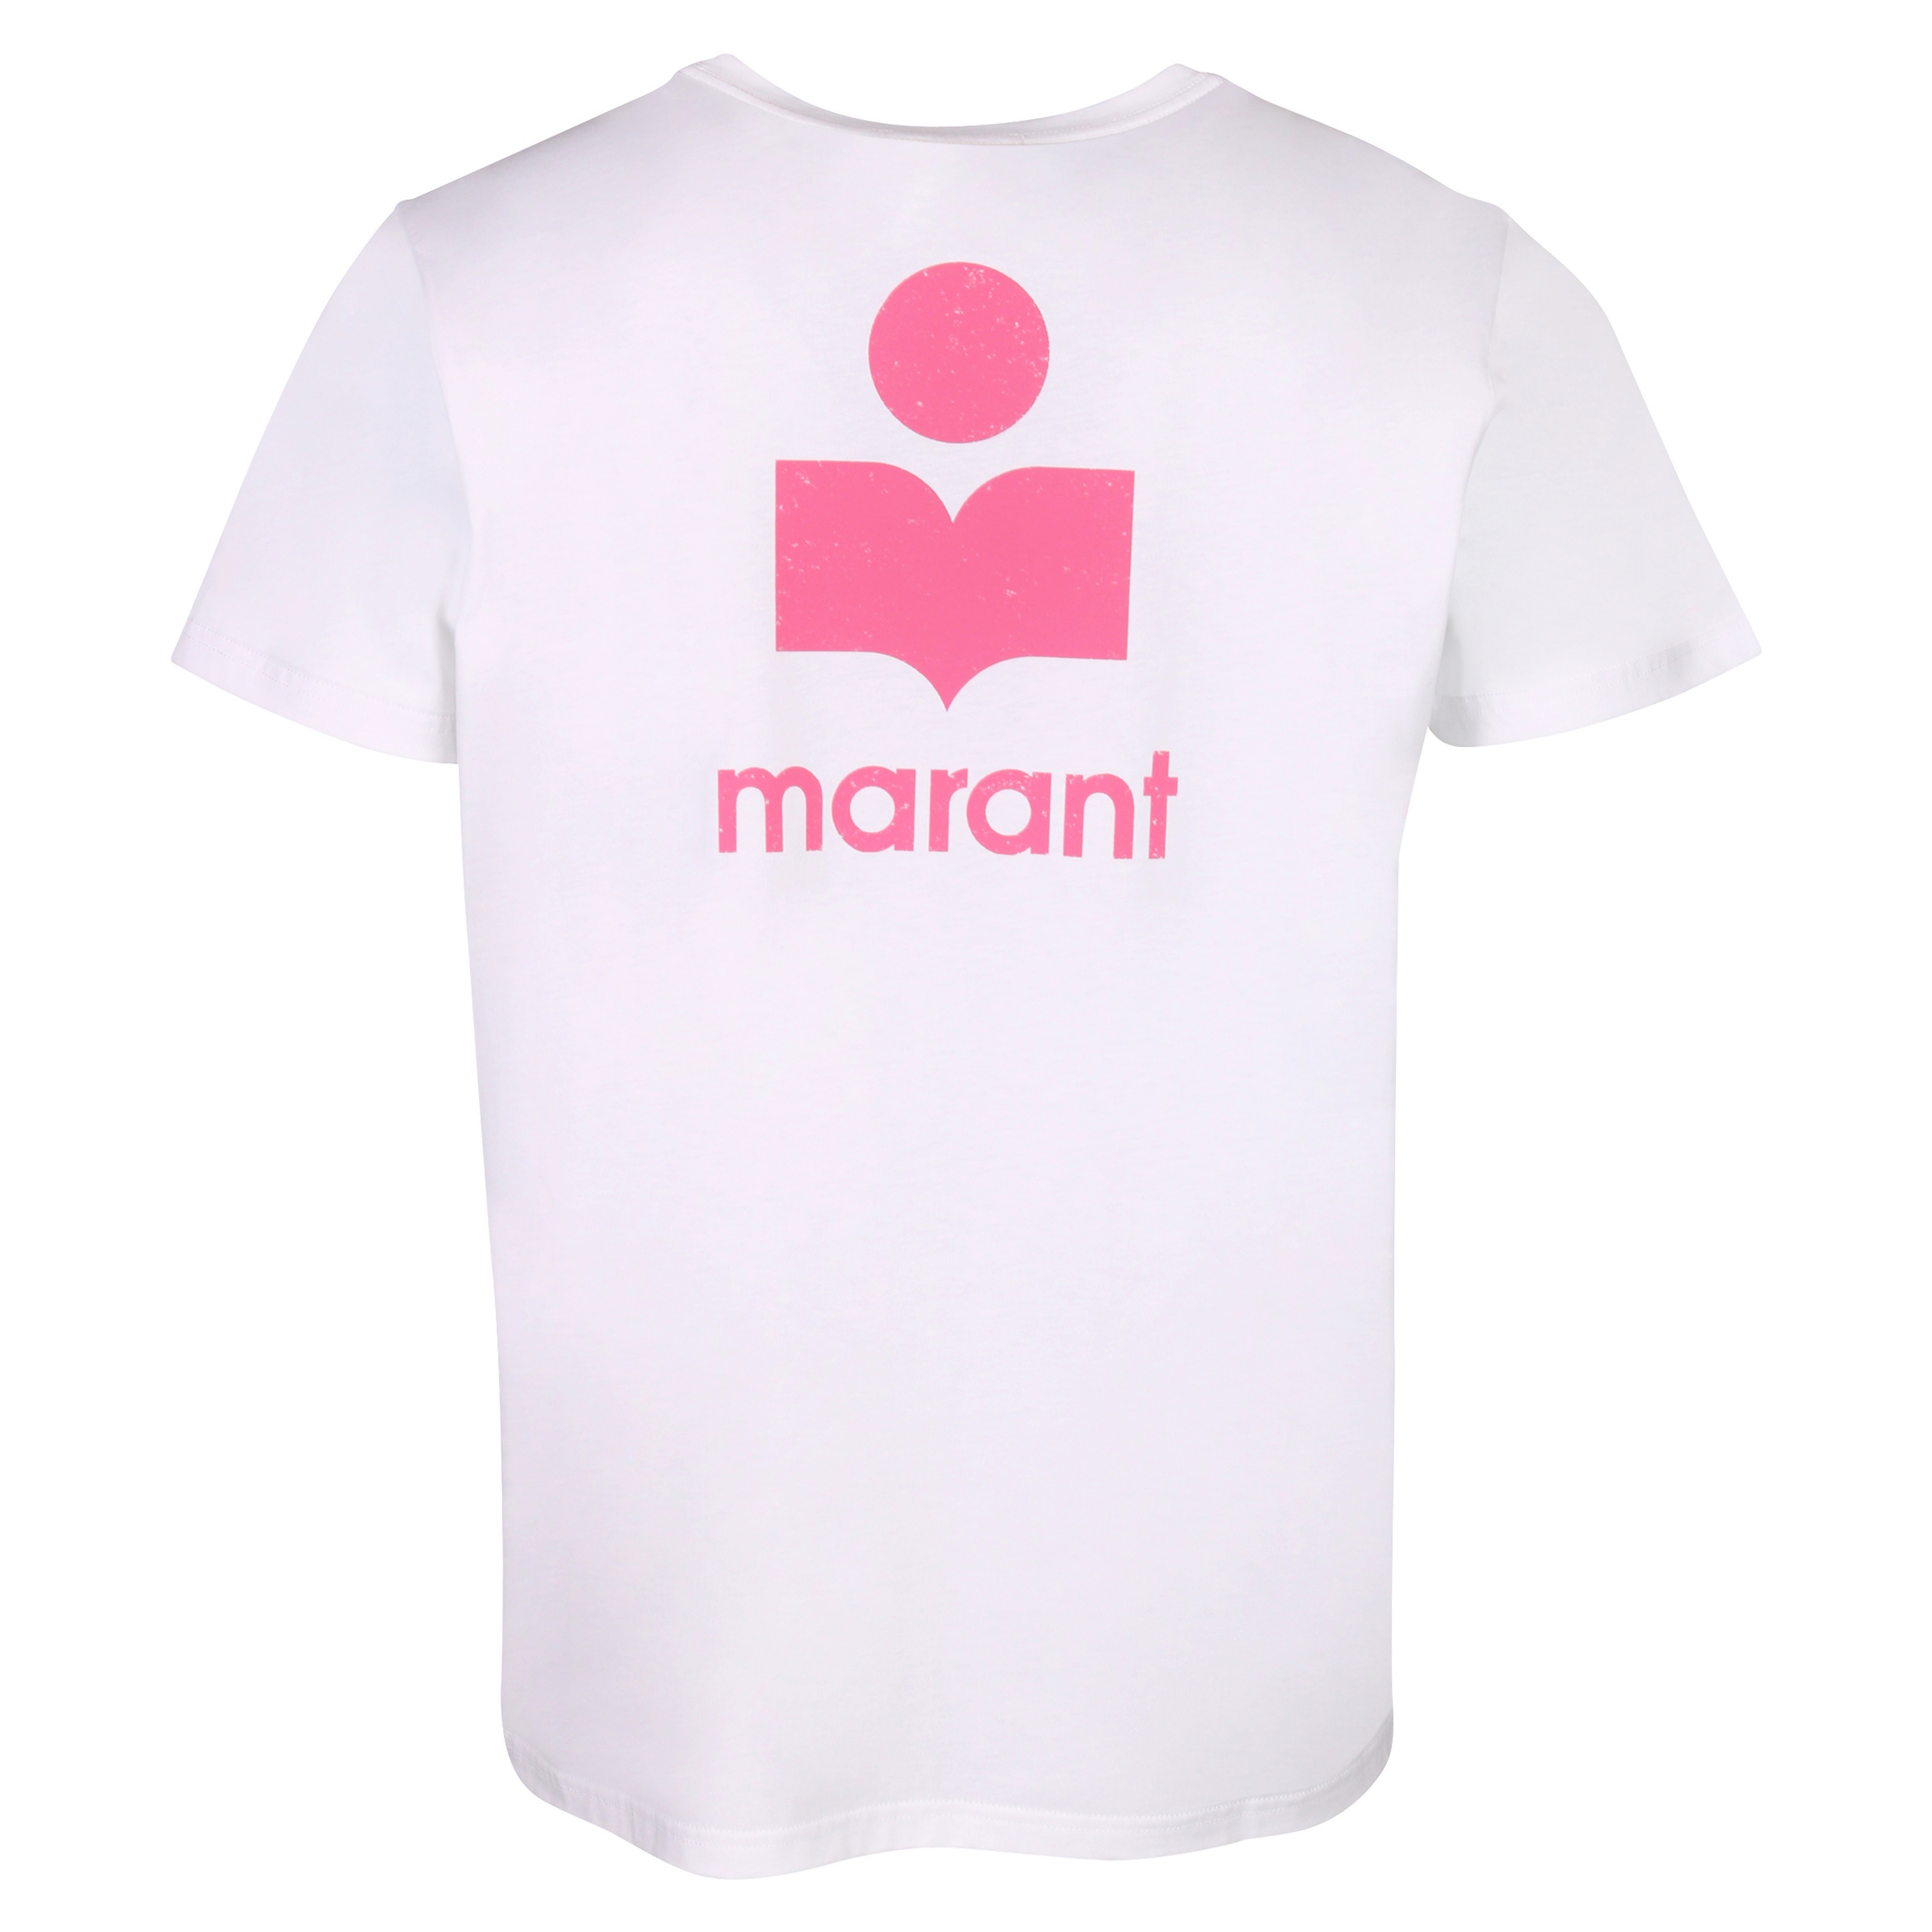 Isabel Marant Zafferh T-Shirt in White Pink